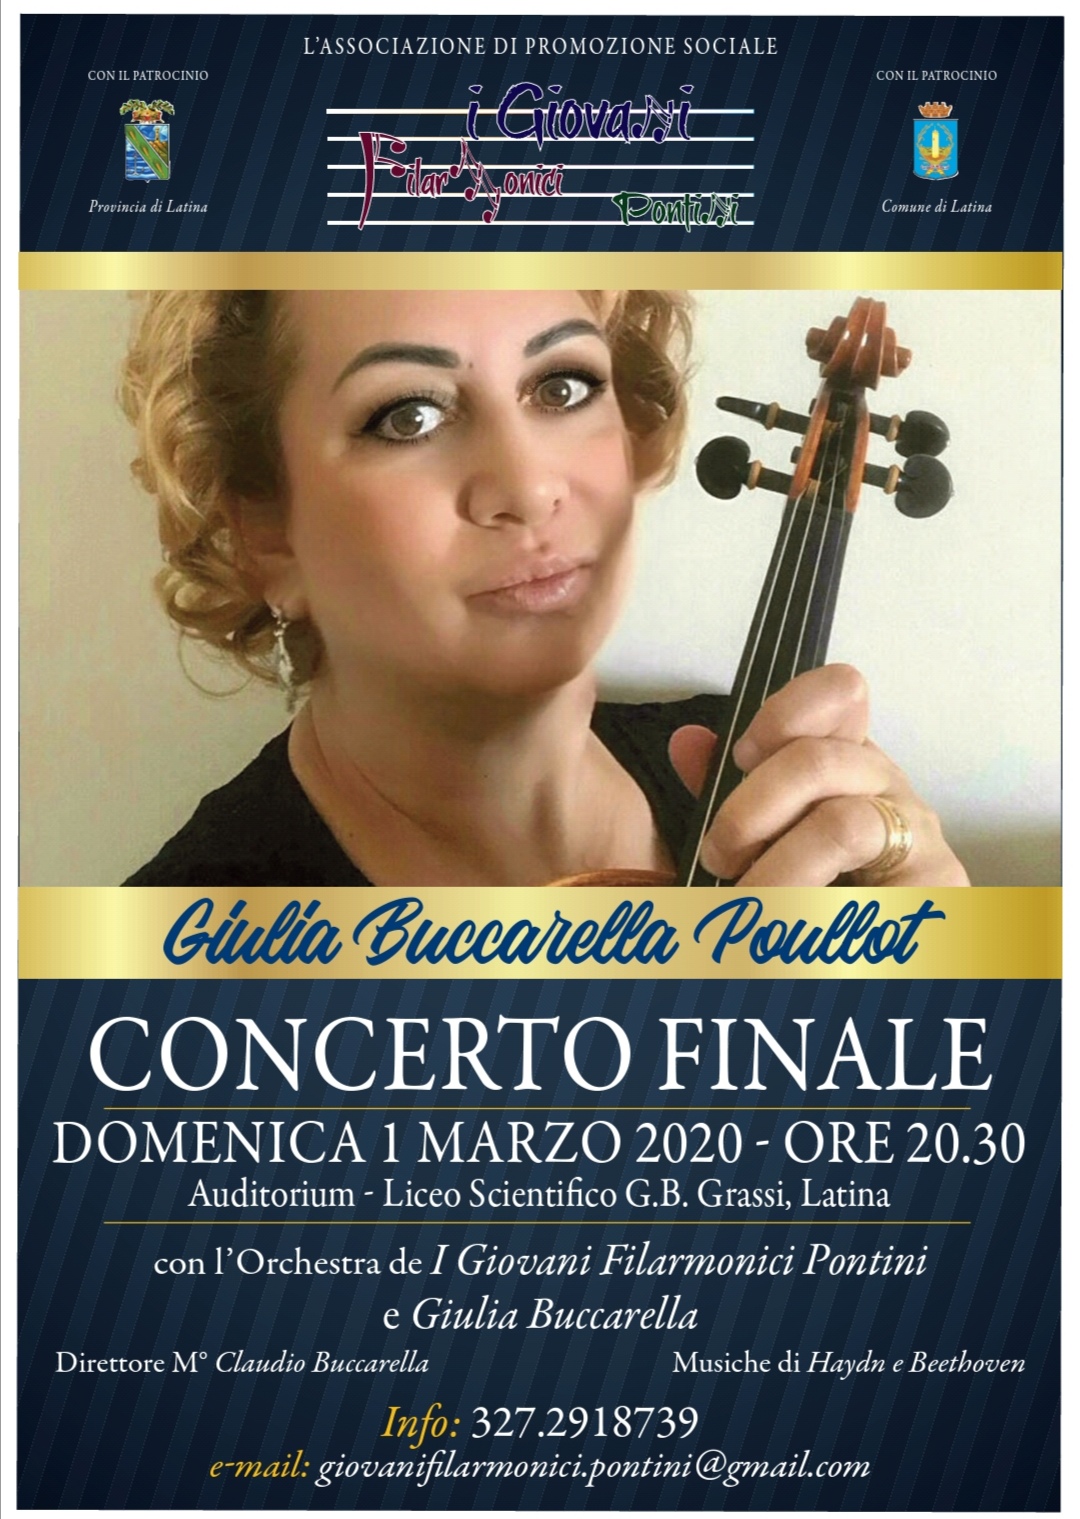 Giulia Buccarella Poullot in Concerto a Latina